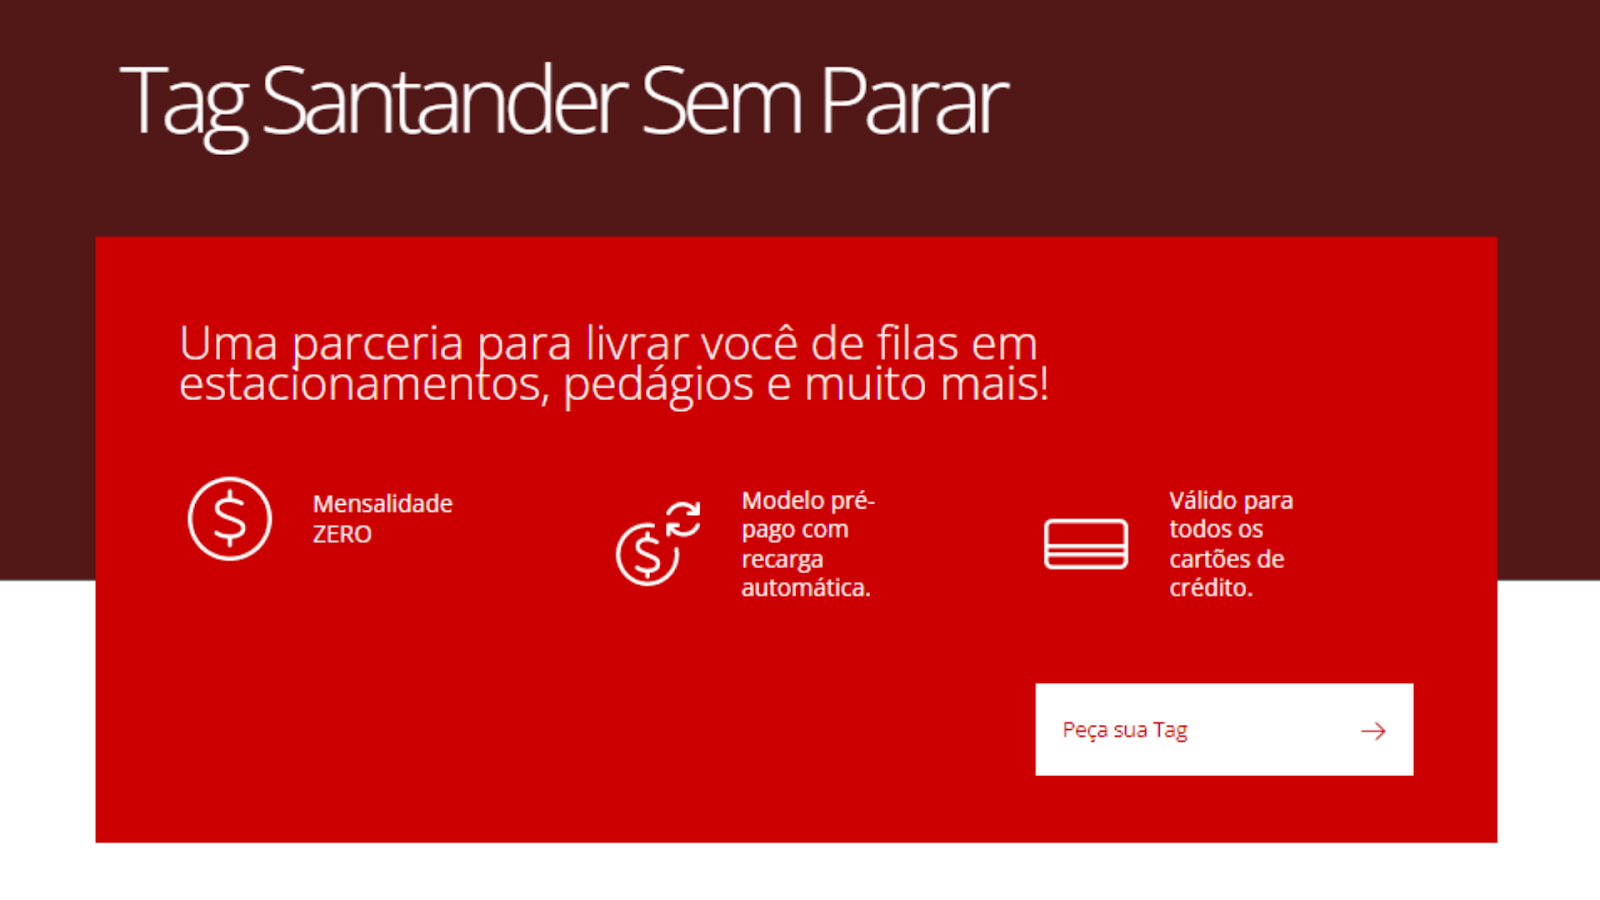 Santander Sem Parar: Vale a pena?